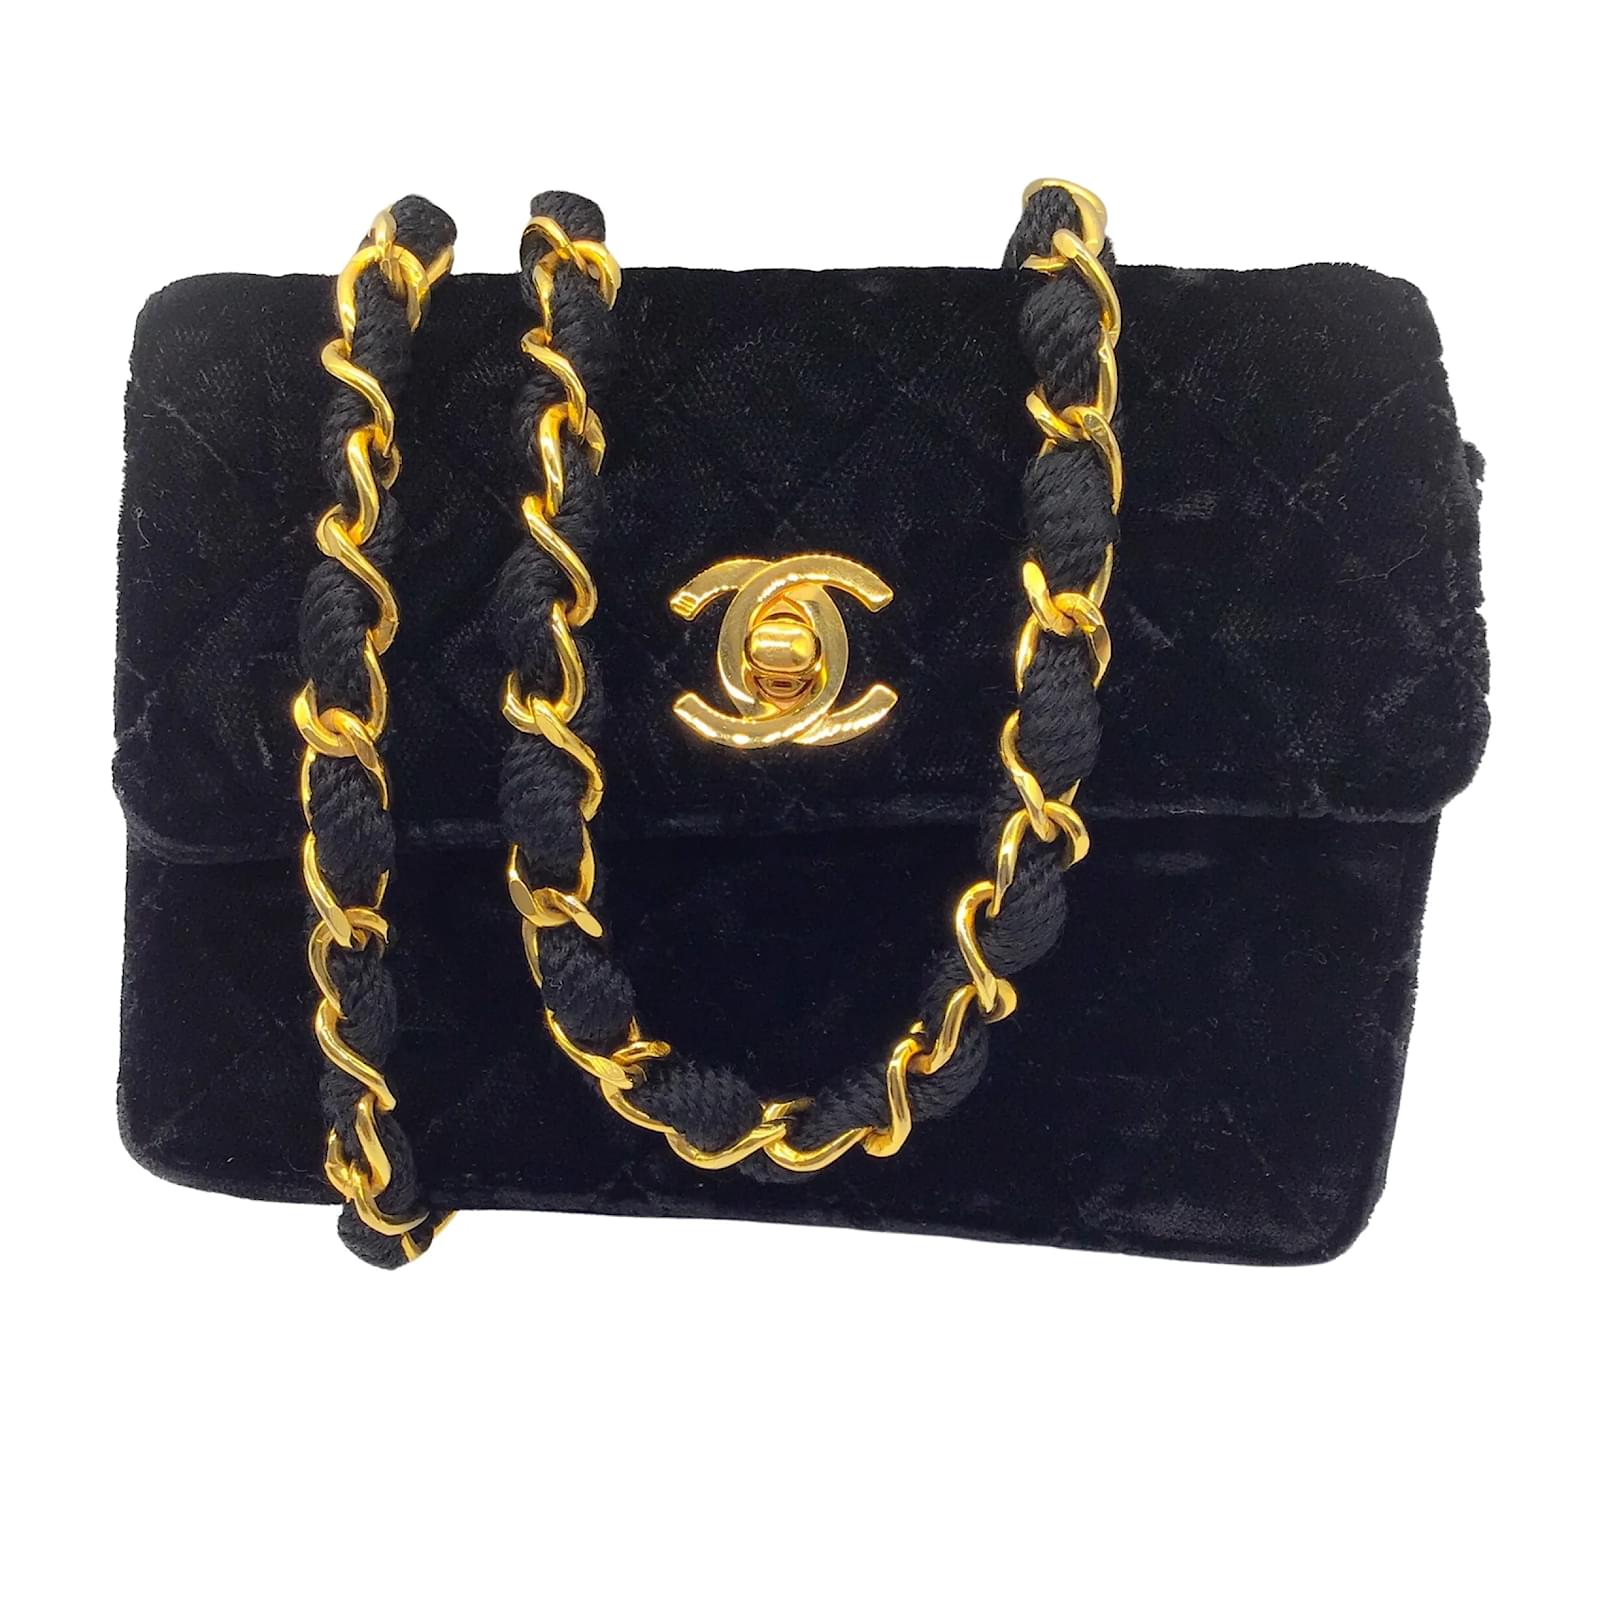 Handbags Chanel Chanel Black Vintage 80's Quilted Velvet Mini Flap Bag